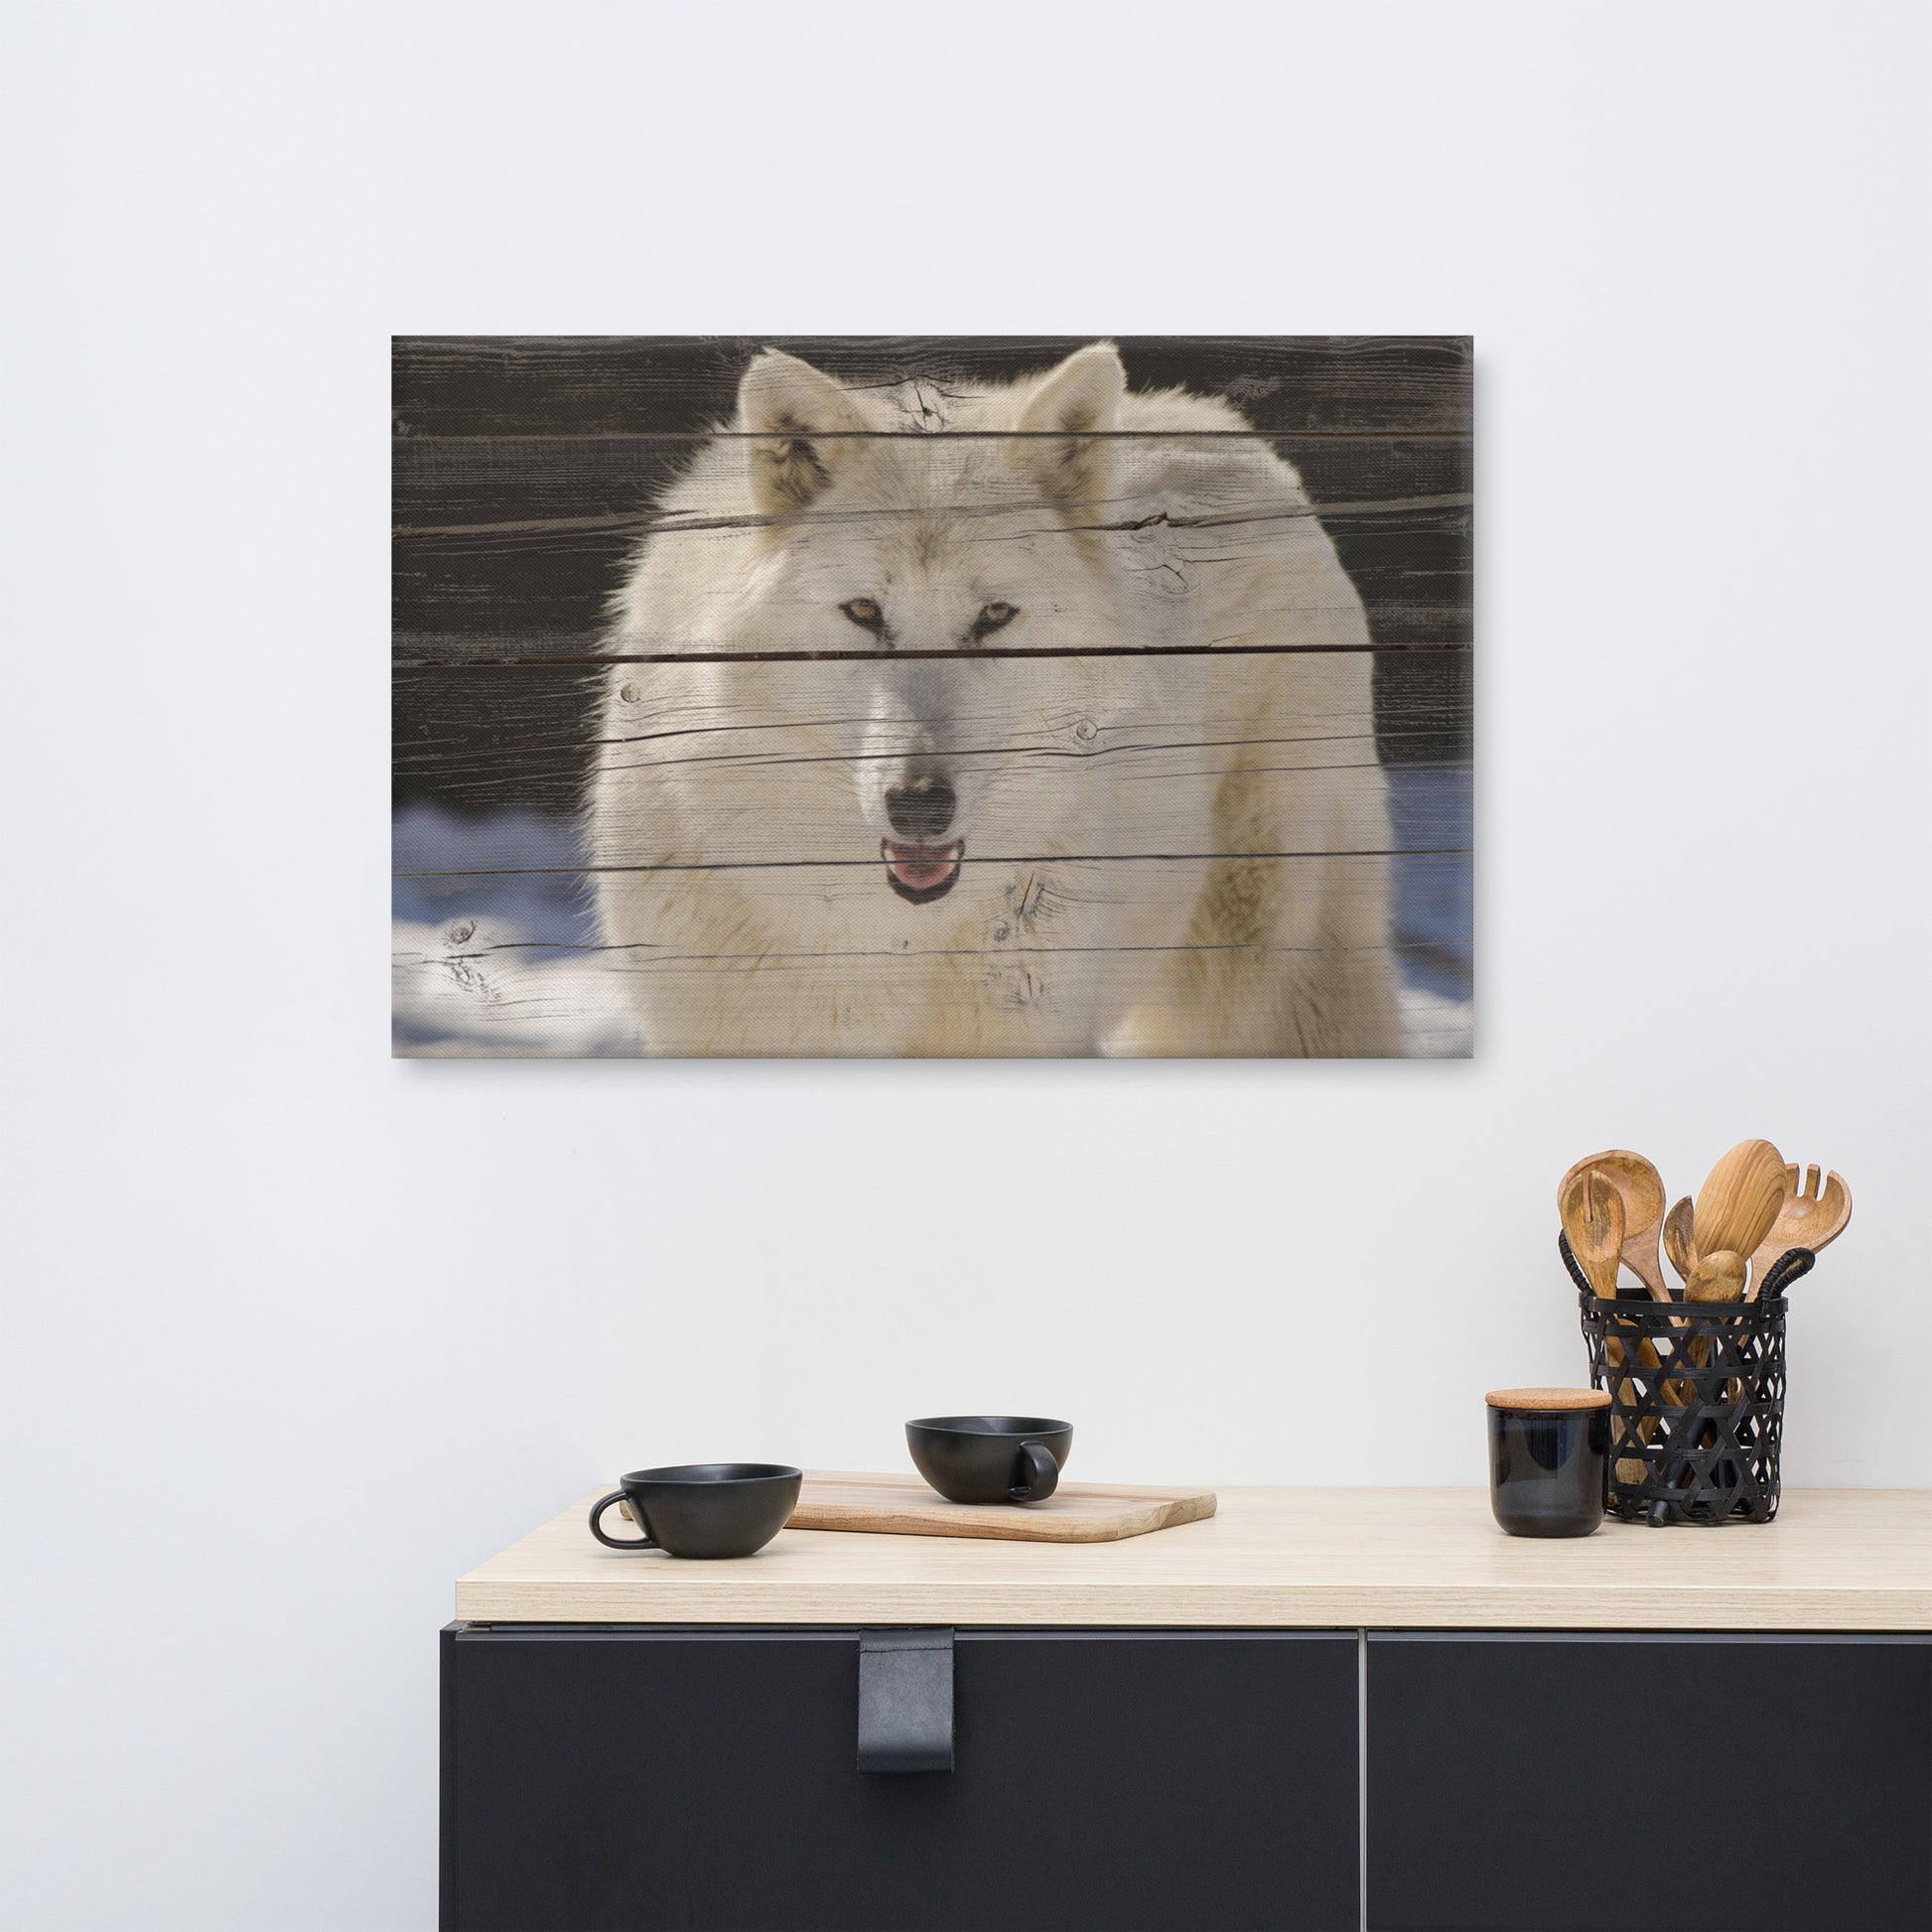 Minimalist Kitchen Wall Art: White Wolf Portrait on Faux Weathered Wood Texture - Wildlife / Animal / Nature Photograph Canvas Wall Art Print - Artwork